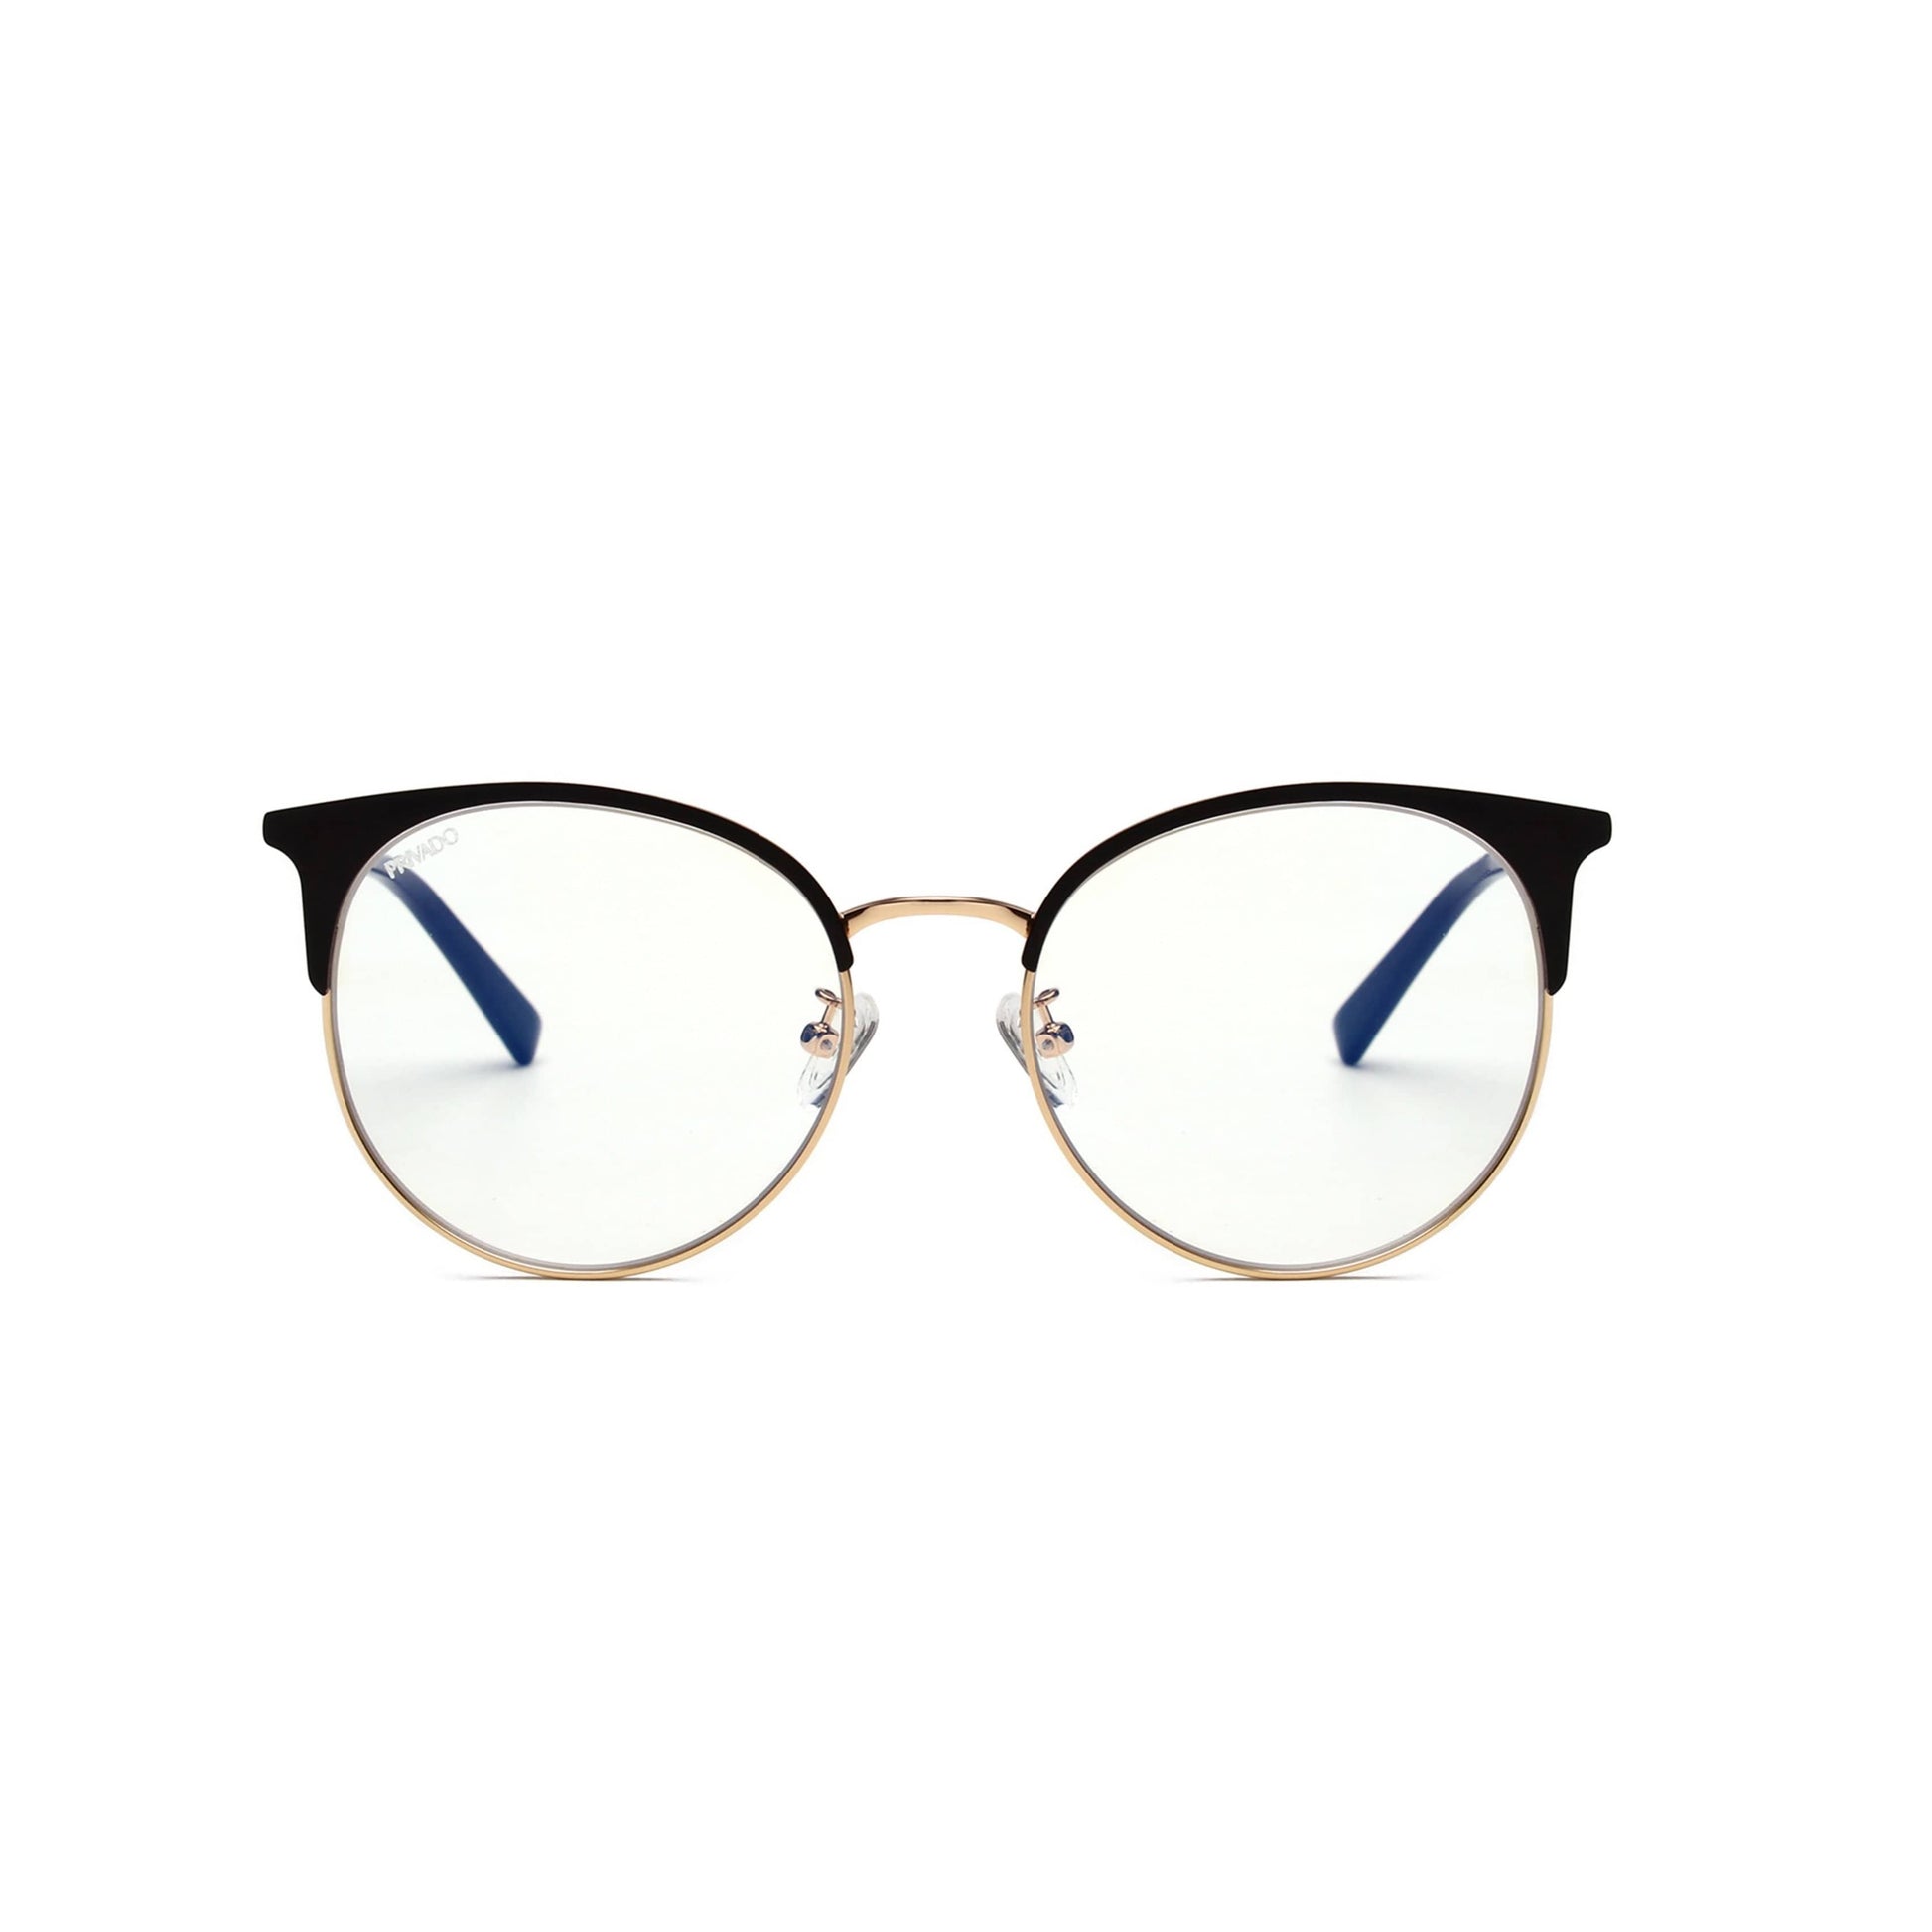 Privado Verraux black & gold sunglasses,metal frame,blue light nylon polarized lens,UV400 protected with anti-reflective coating